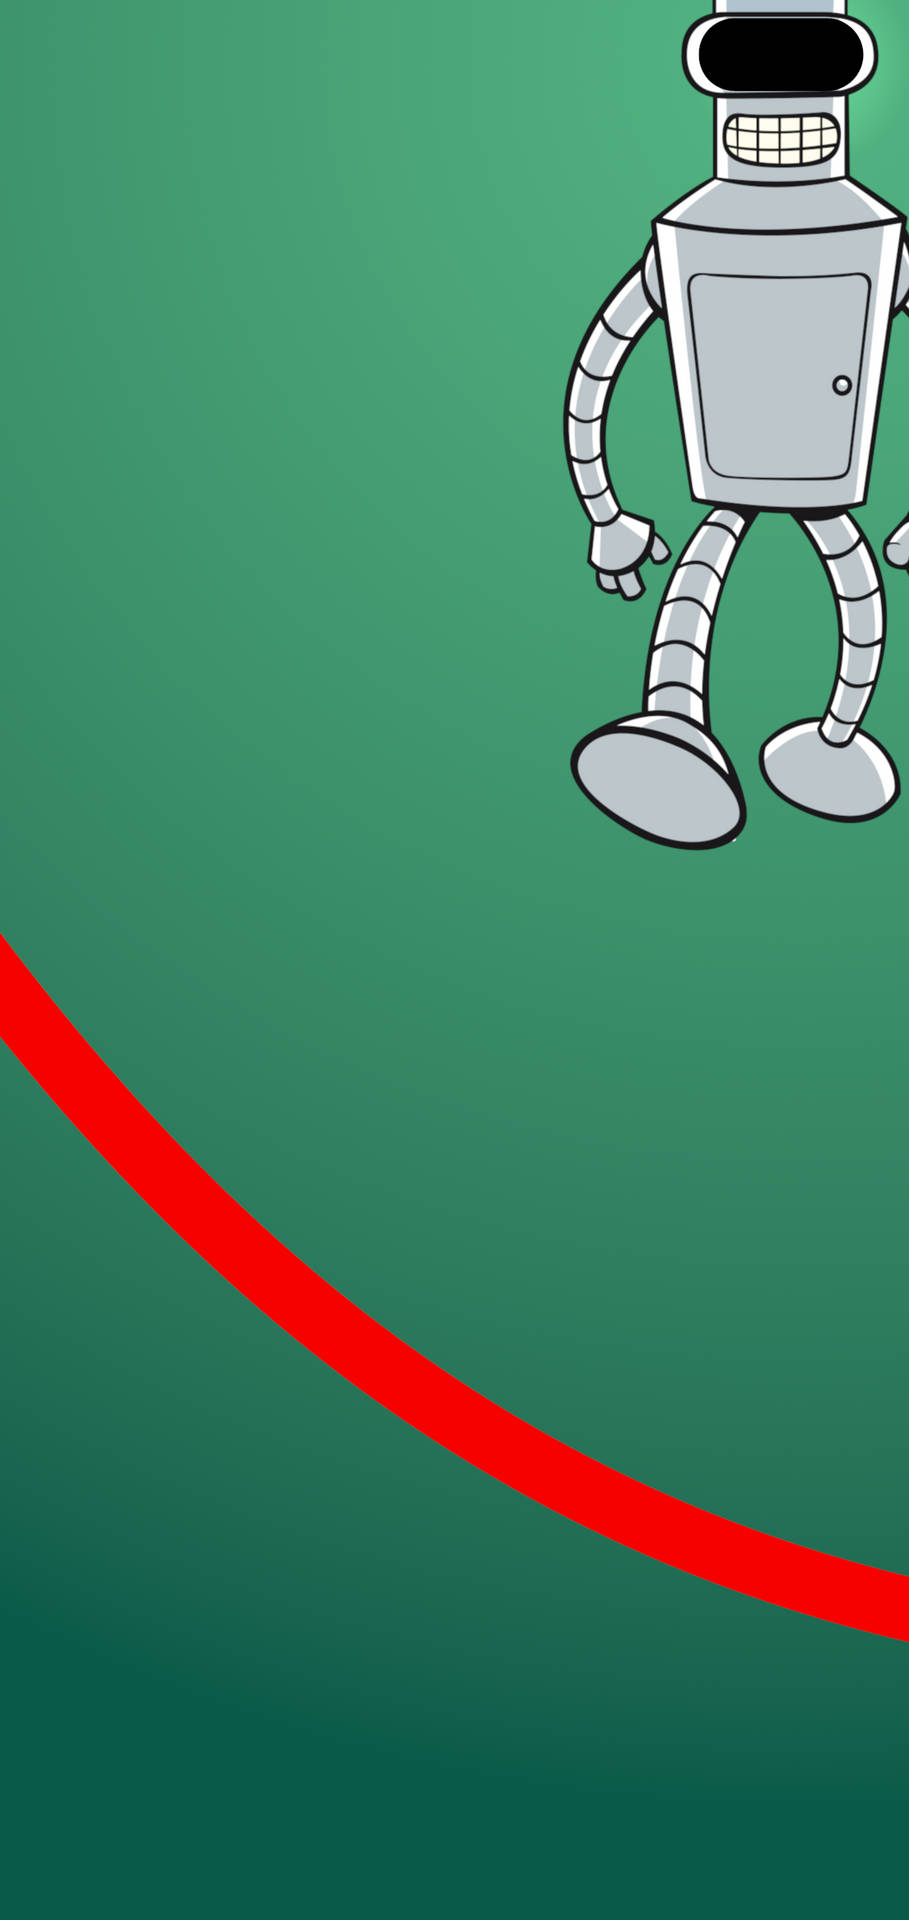 S10 Futurama Robot Bender Galaxy Cover Background